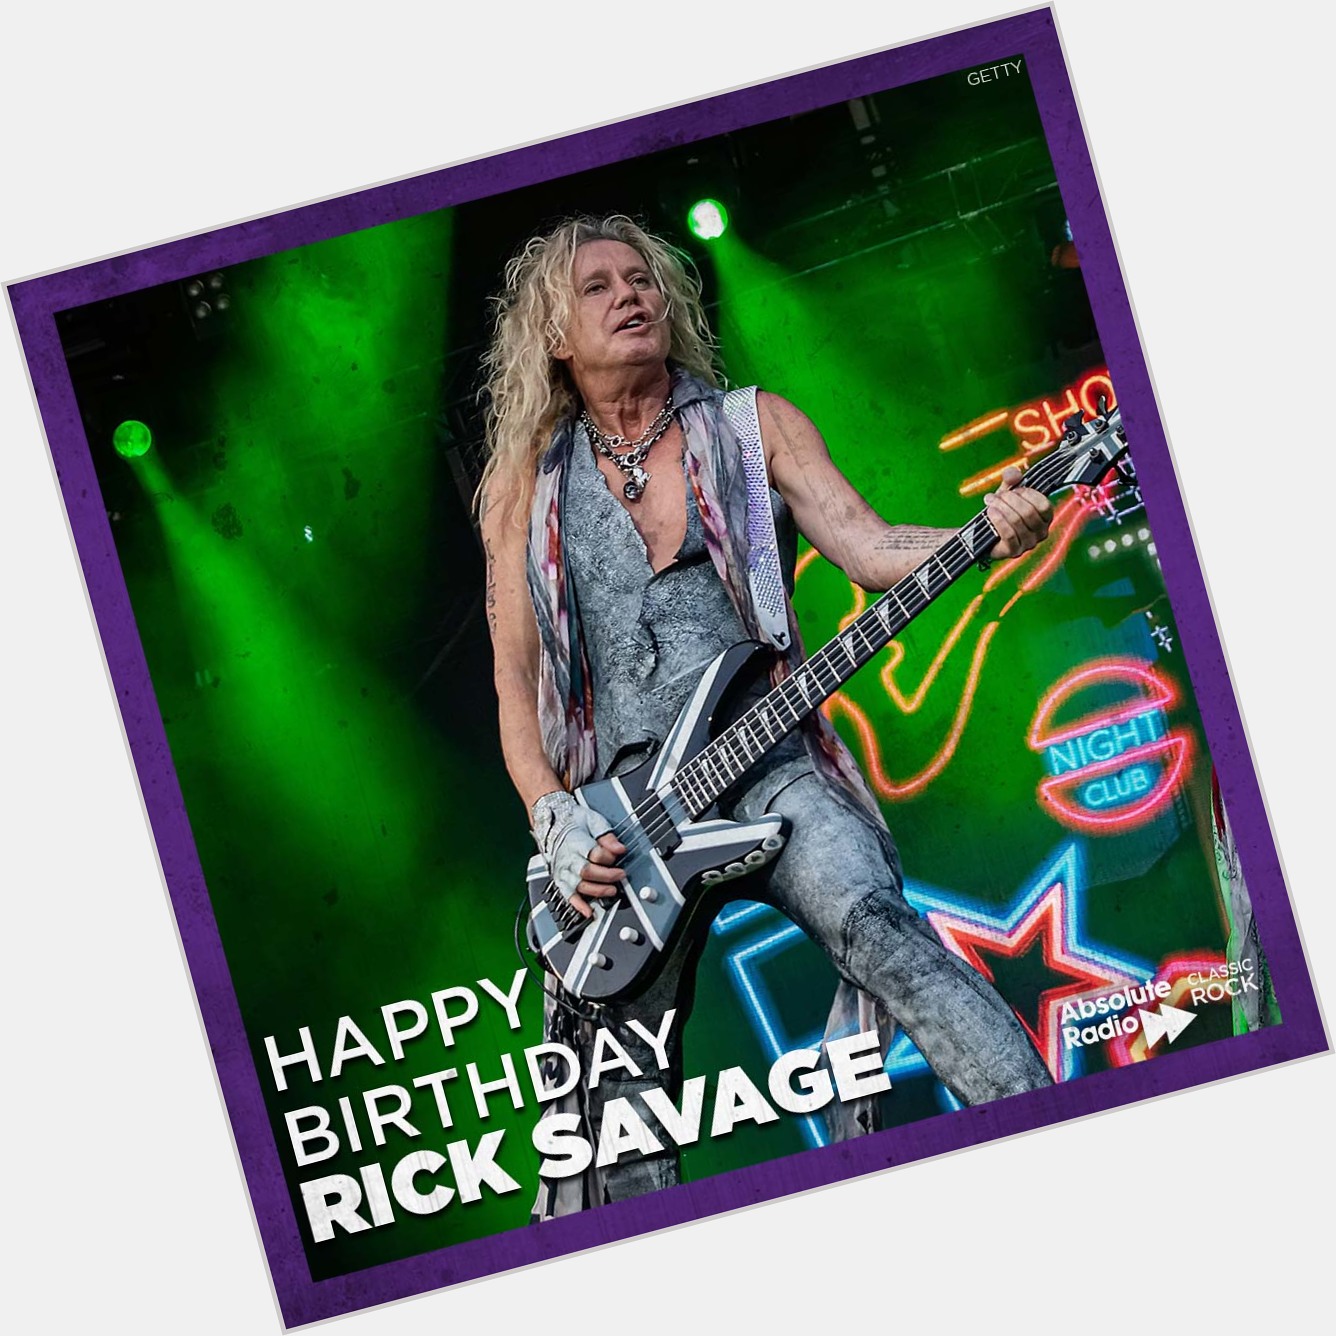 Happy birthday, Sav!

Legendary bassist and founding member Rick Savage is 61 today! 